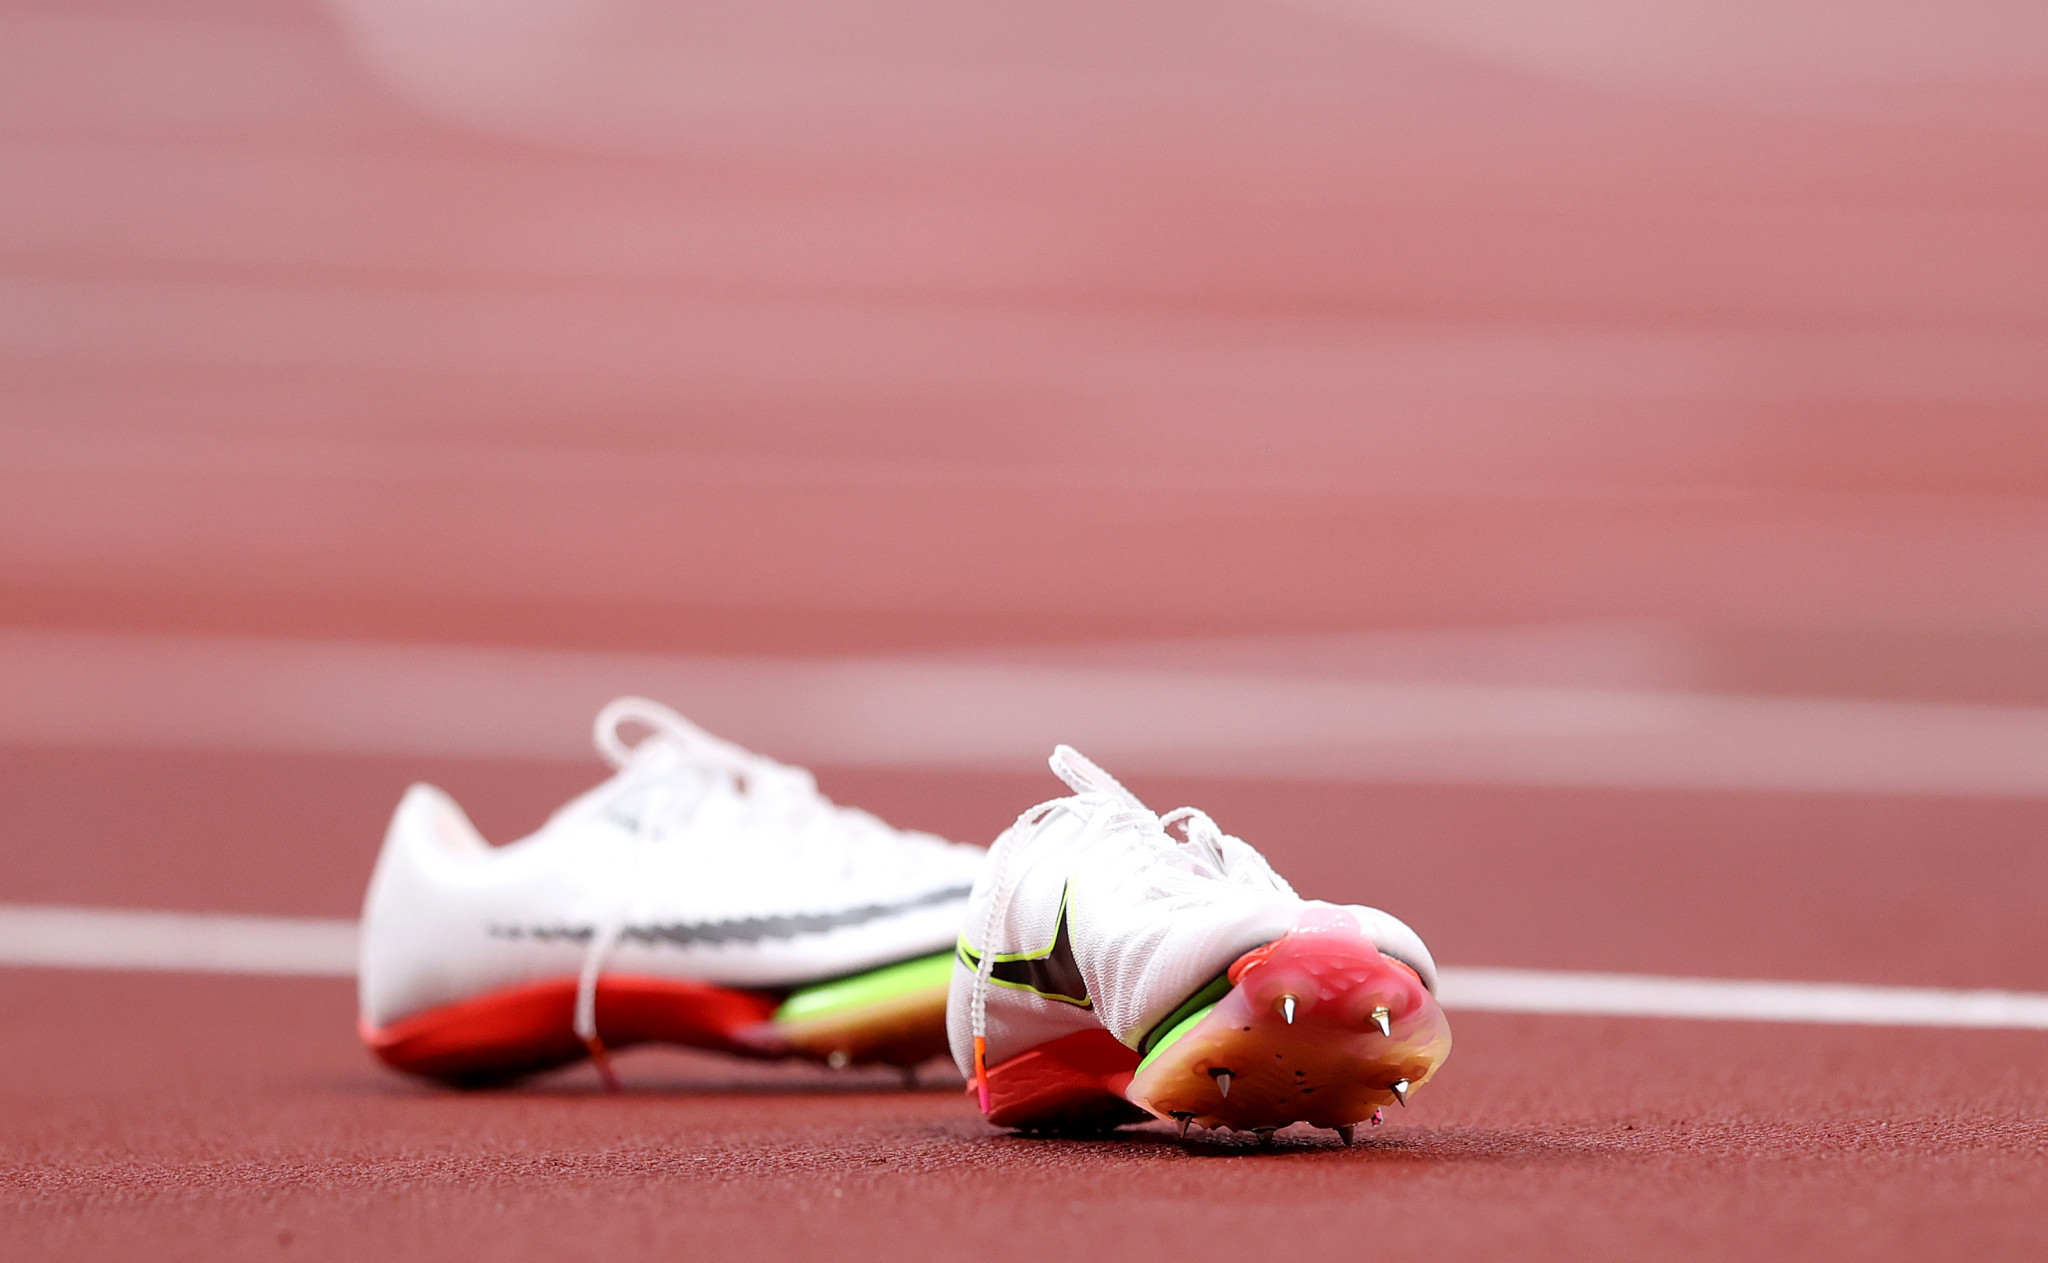 British base for Paris 2024 opens new athletics track